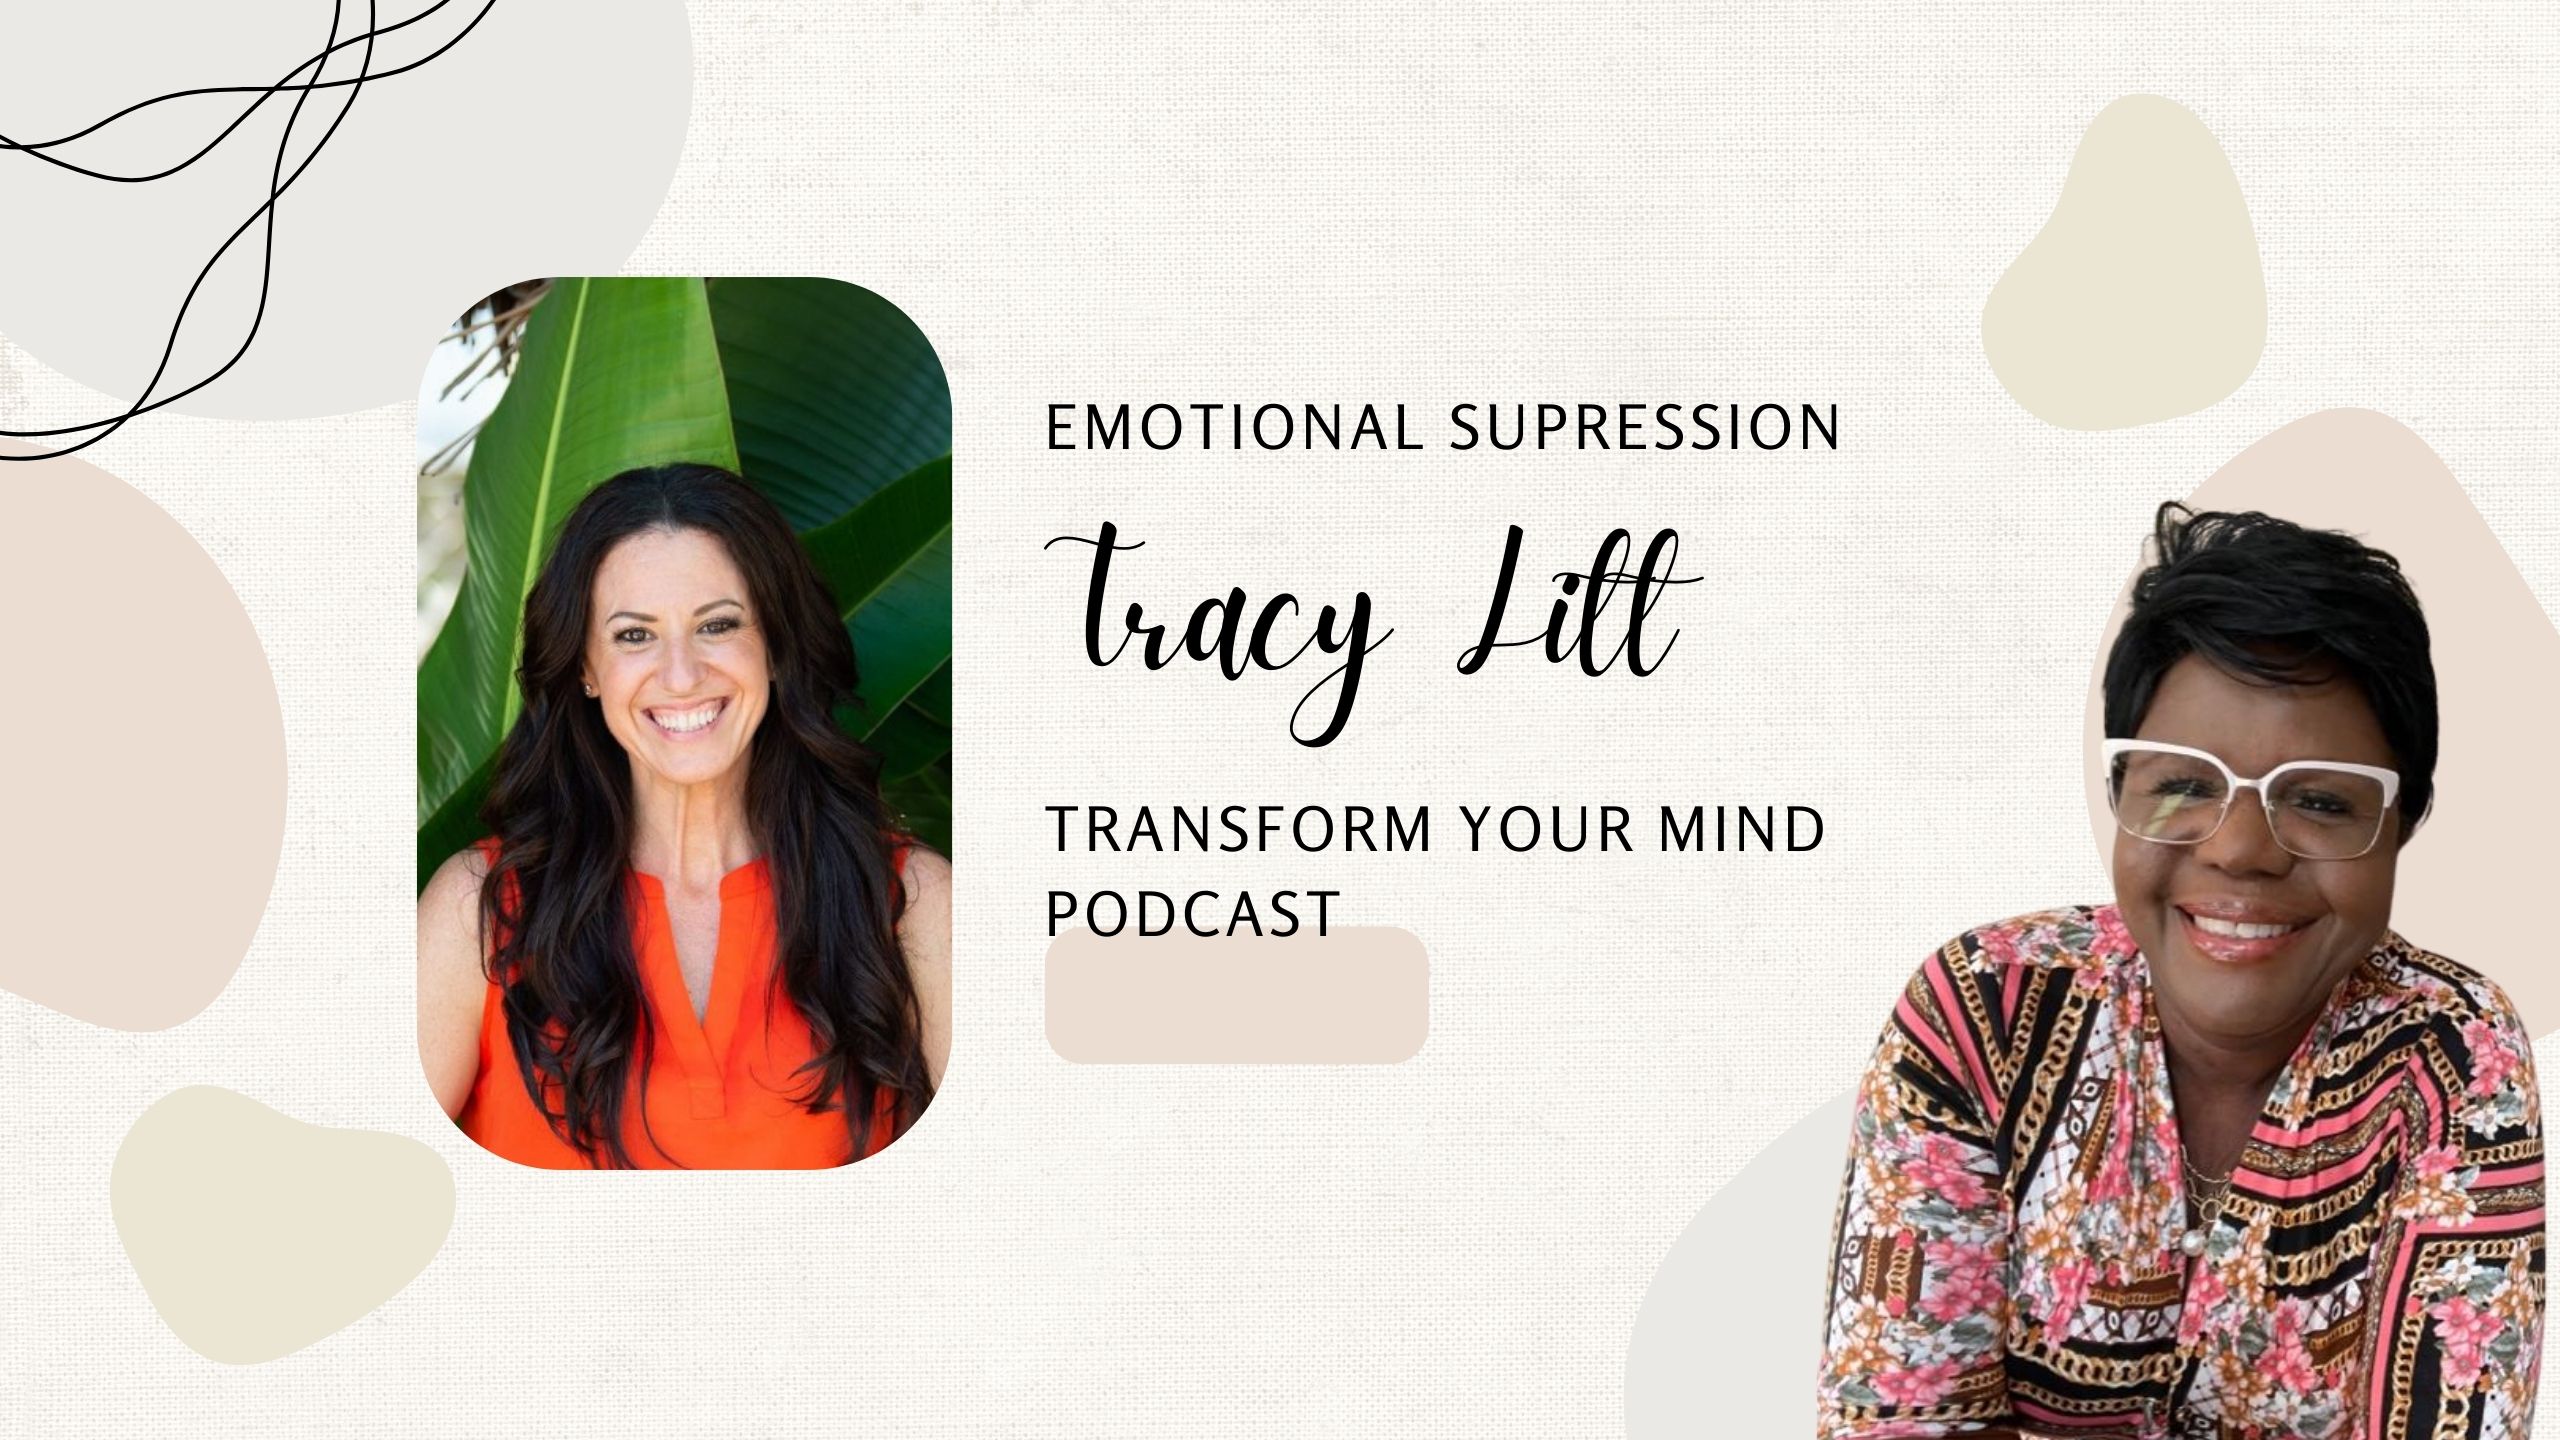 Tracy Litt Spirituality and Emotional Suppression